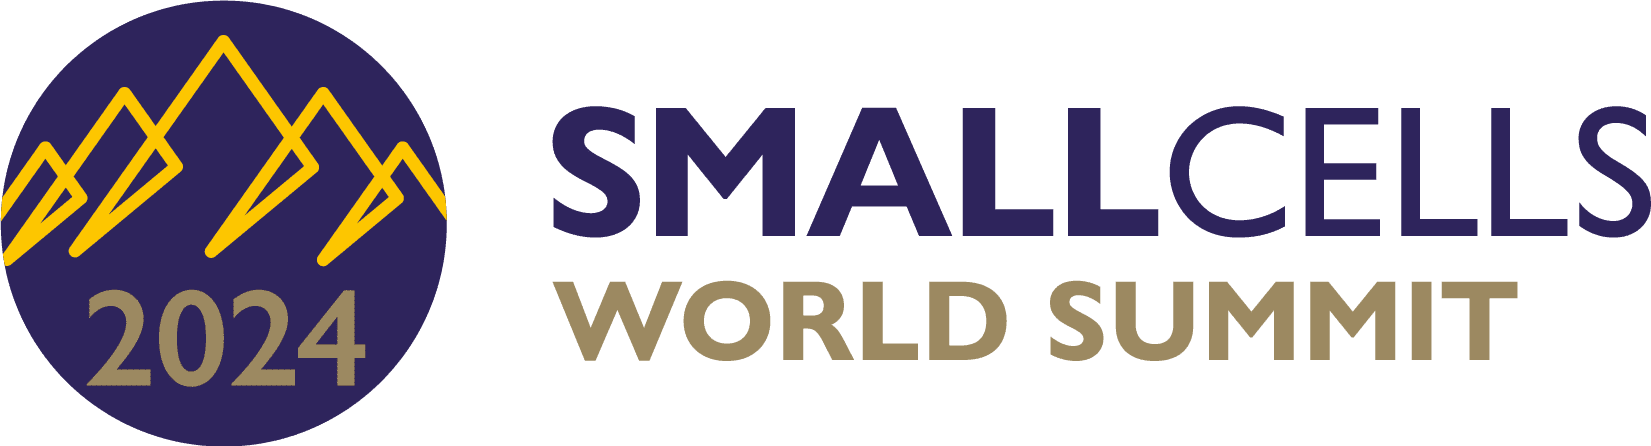 Small Cells World Summit